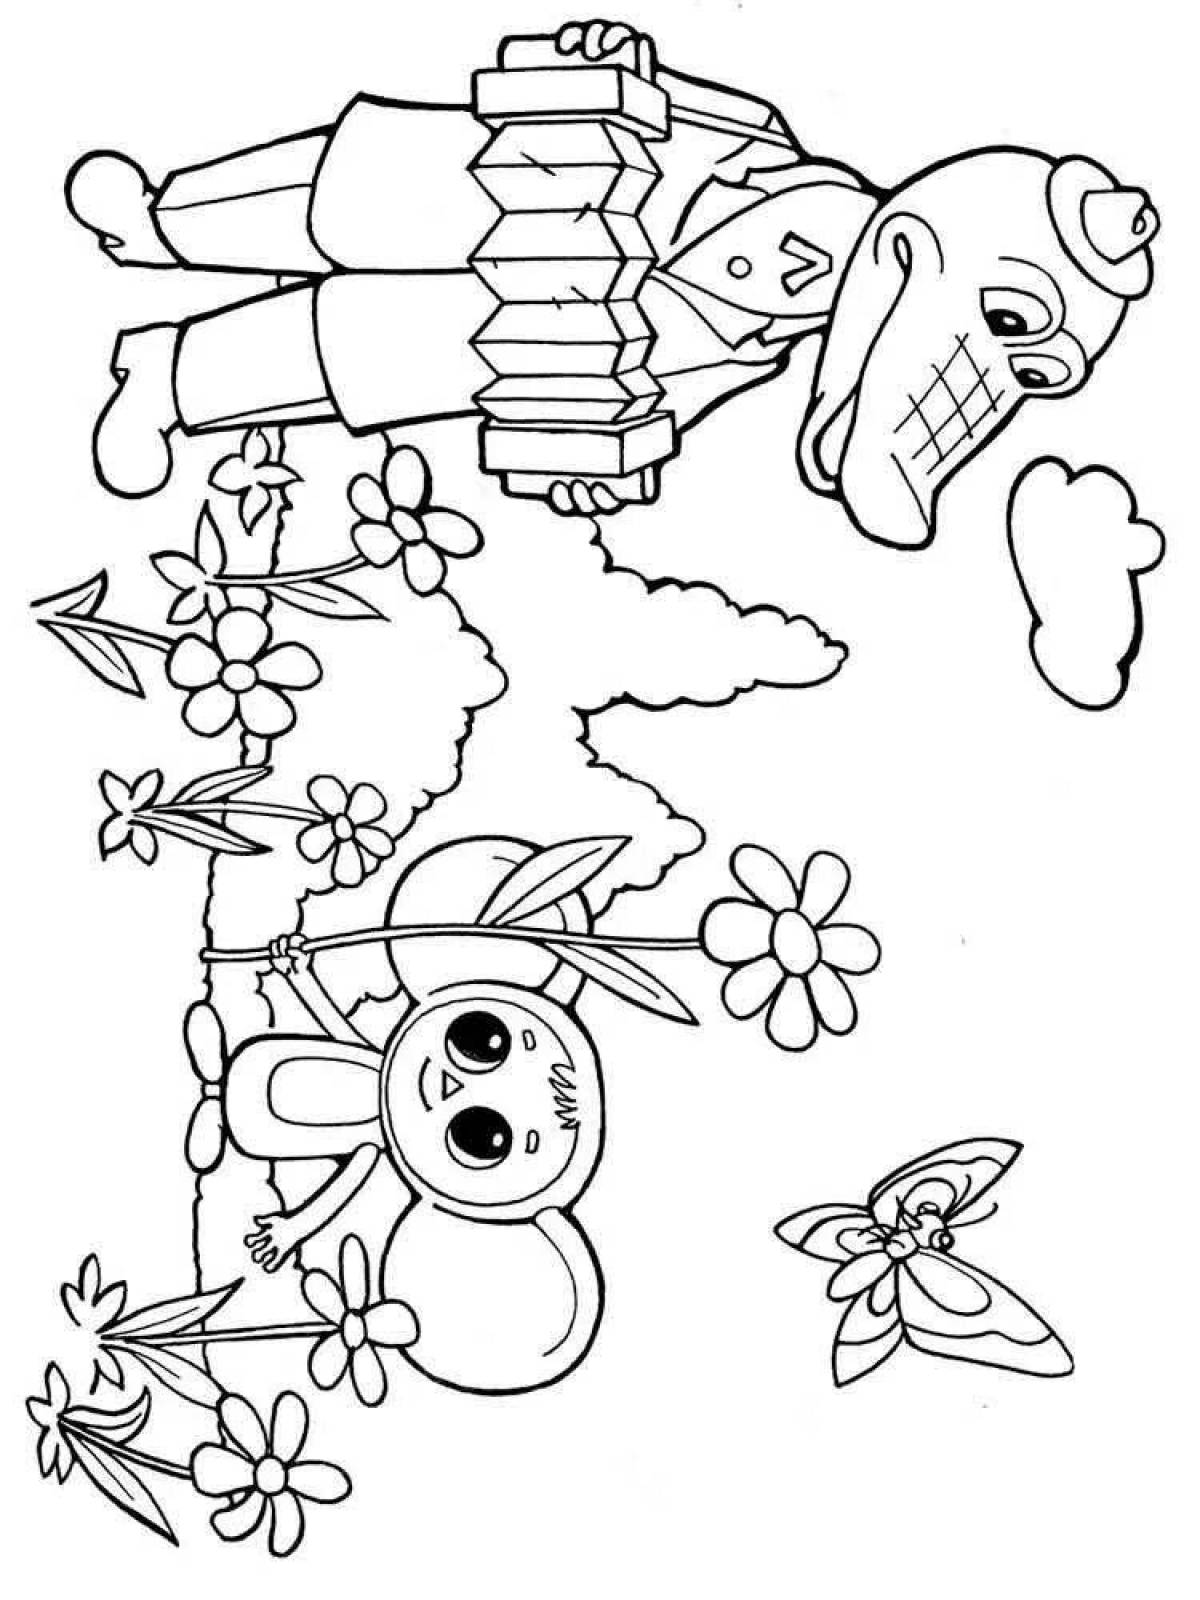 Coloring book magic cheburashka and crocodile gene